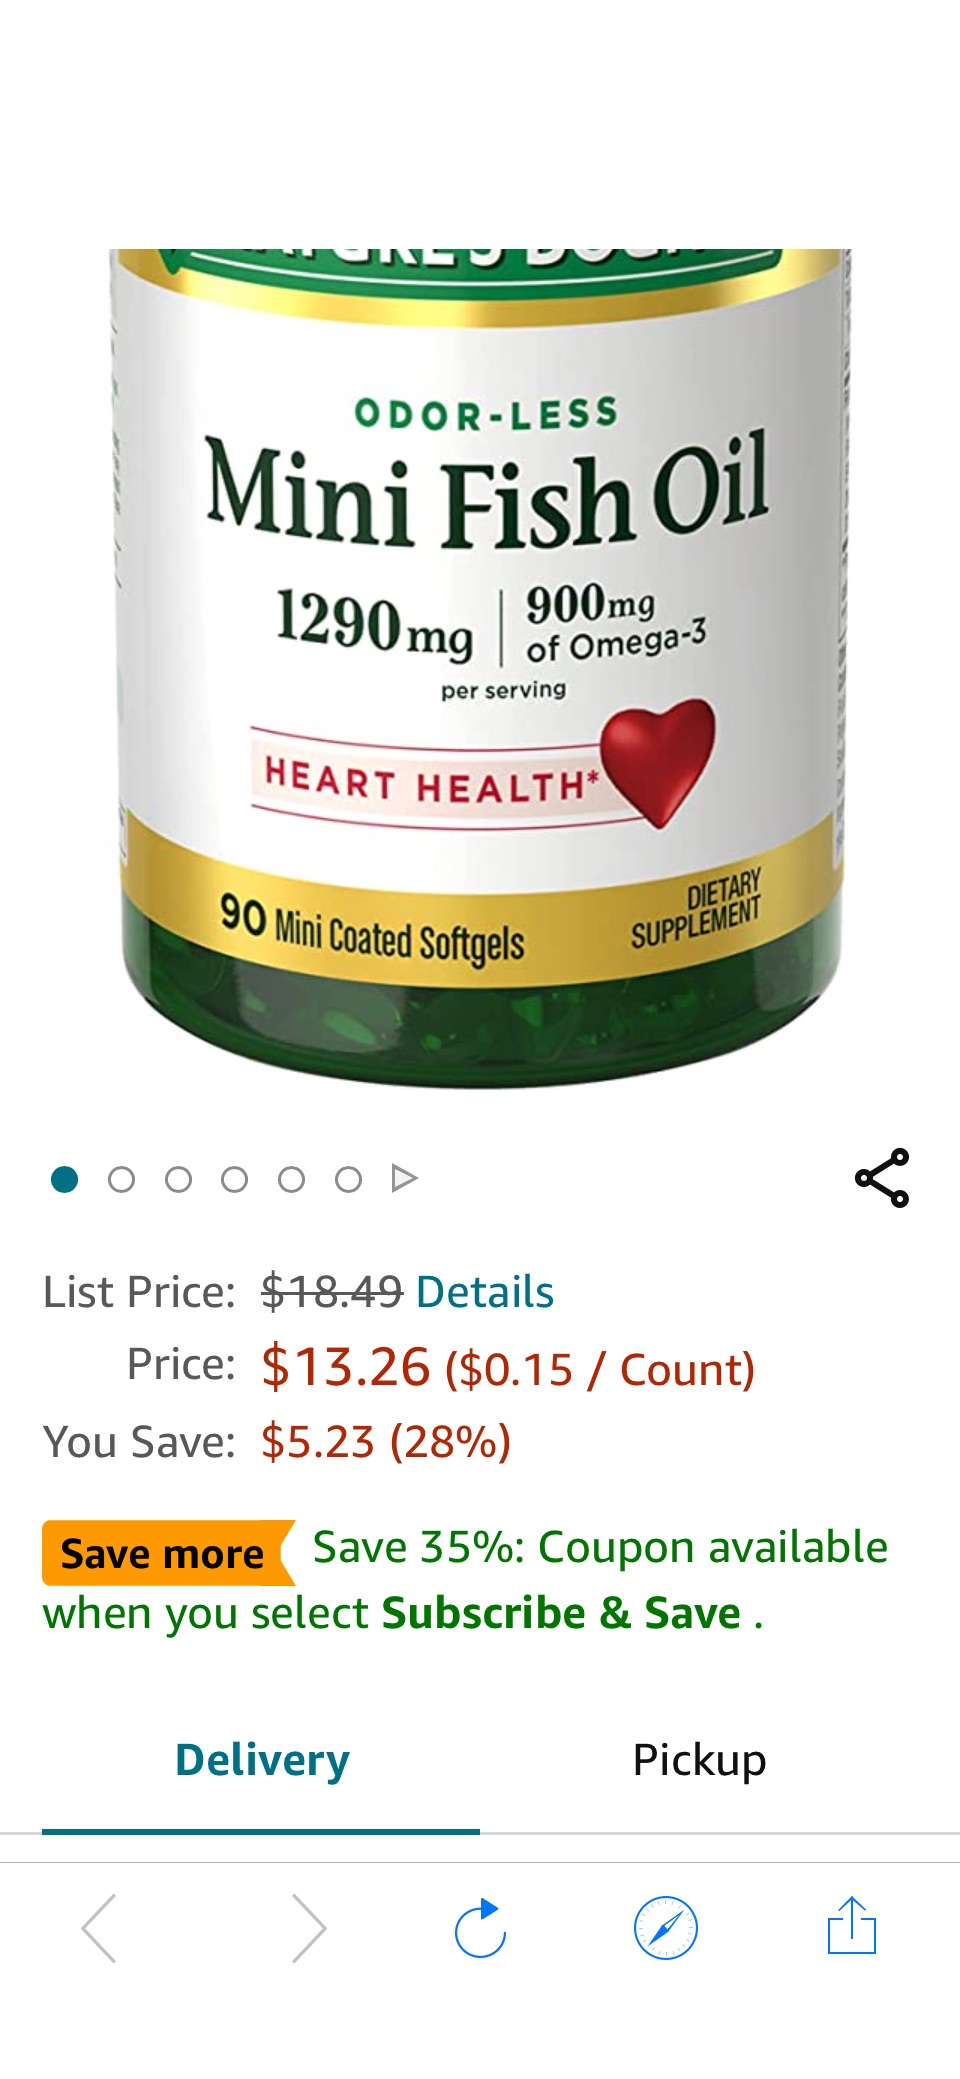 Amazon.com: Nature’s Bounty Mini Fish Oil Softgels 1290 mg, Omega-3, Supports Heart Health, Odor-Less, 90 Mini Coated Softgels : Health & Household